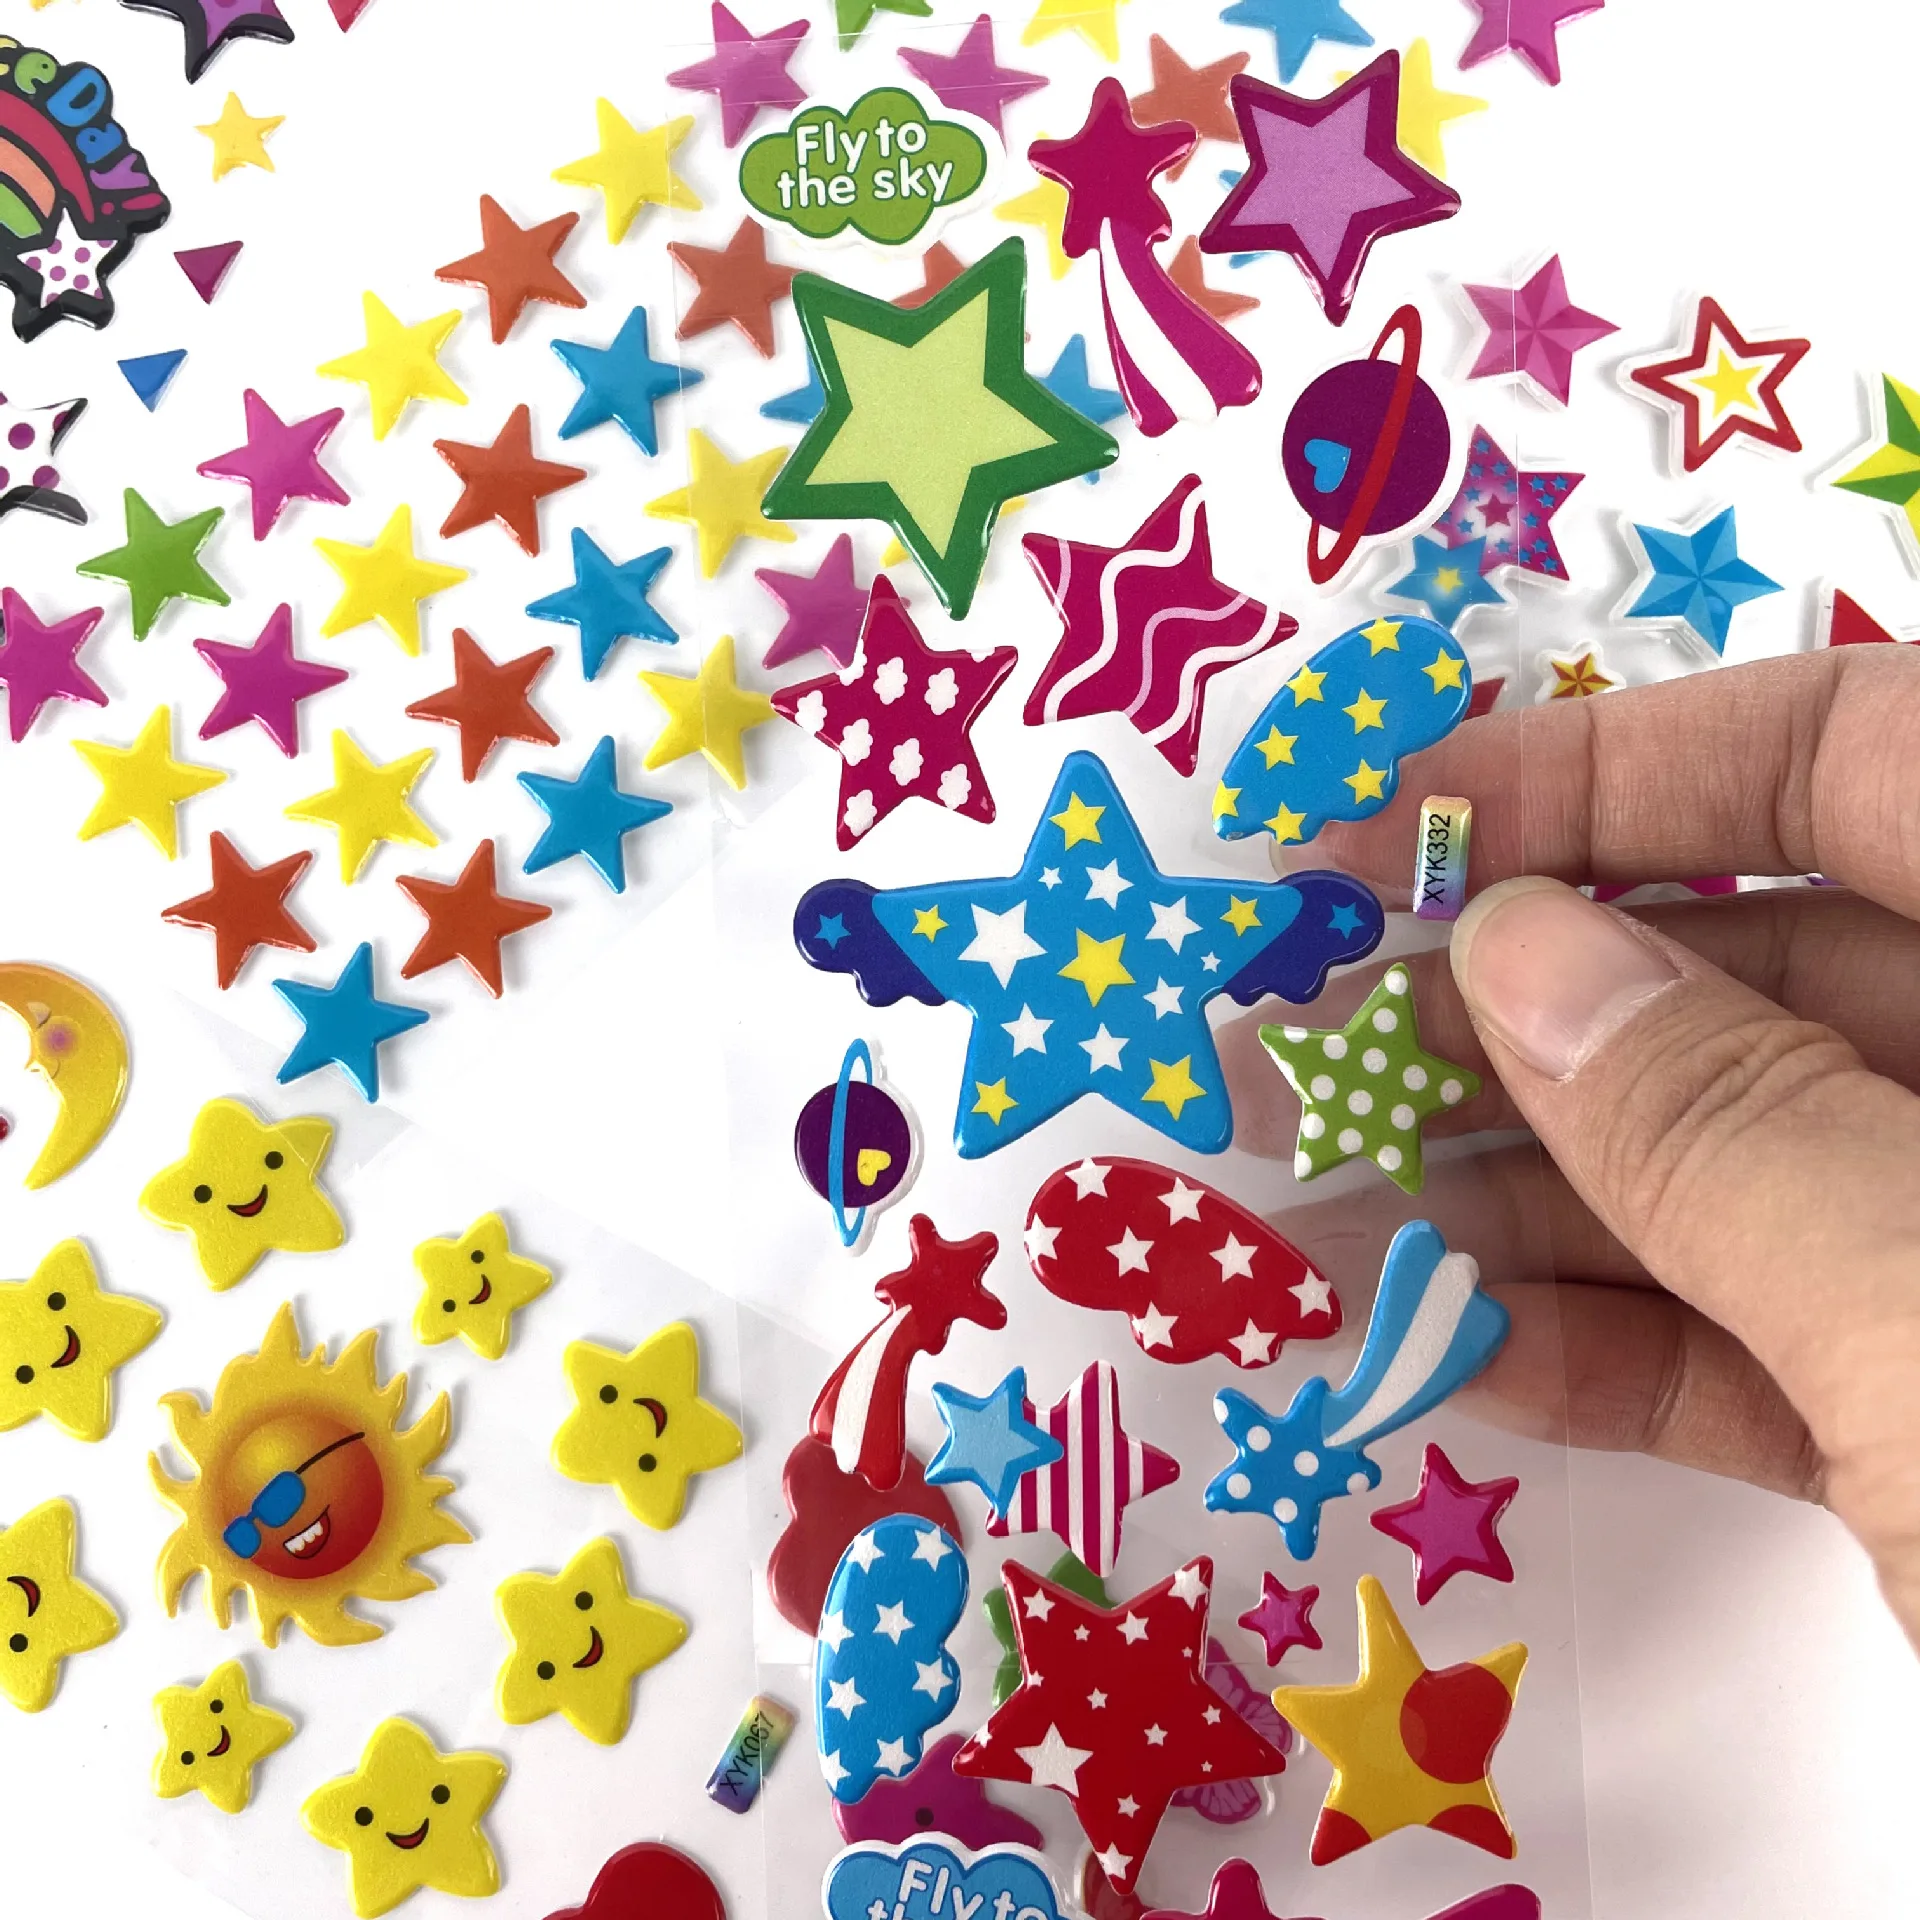 https://ae01.alicdn.com/kf/S990e85c76274489794db96e9bdd0db76x/10-Sheets-3D-Puffy-Stickers-Star-Boys-Girls-Gift-Toys-for-Children-Teacher-s-Reward-Supplies.jpg